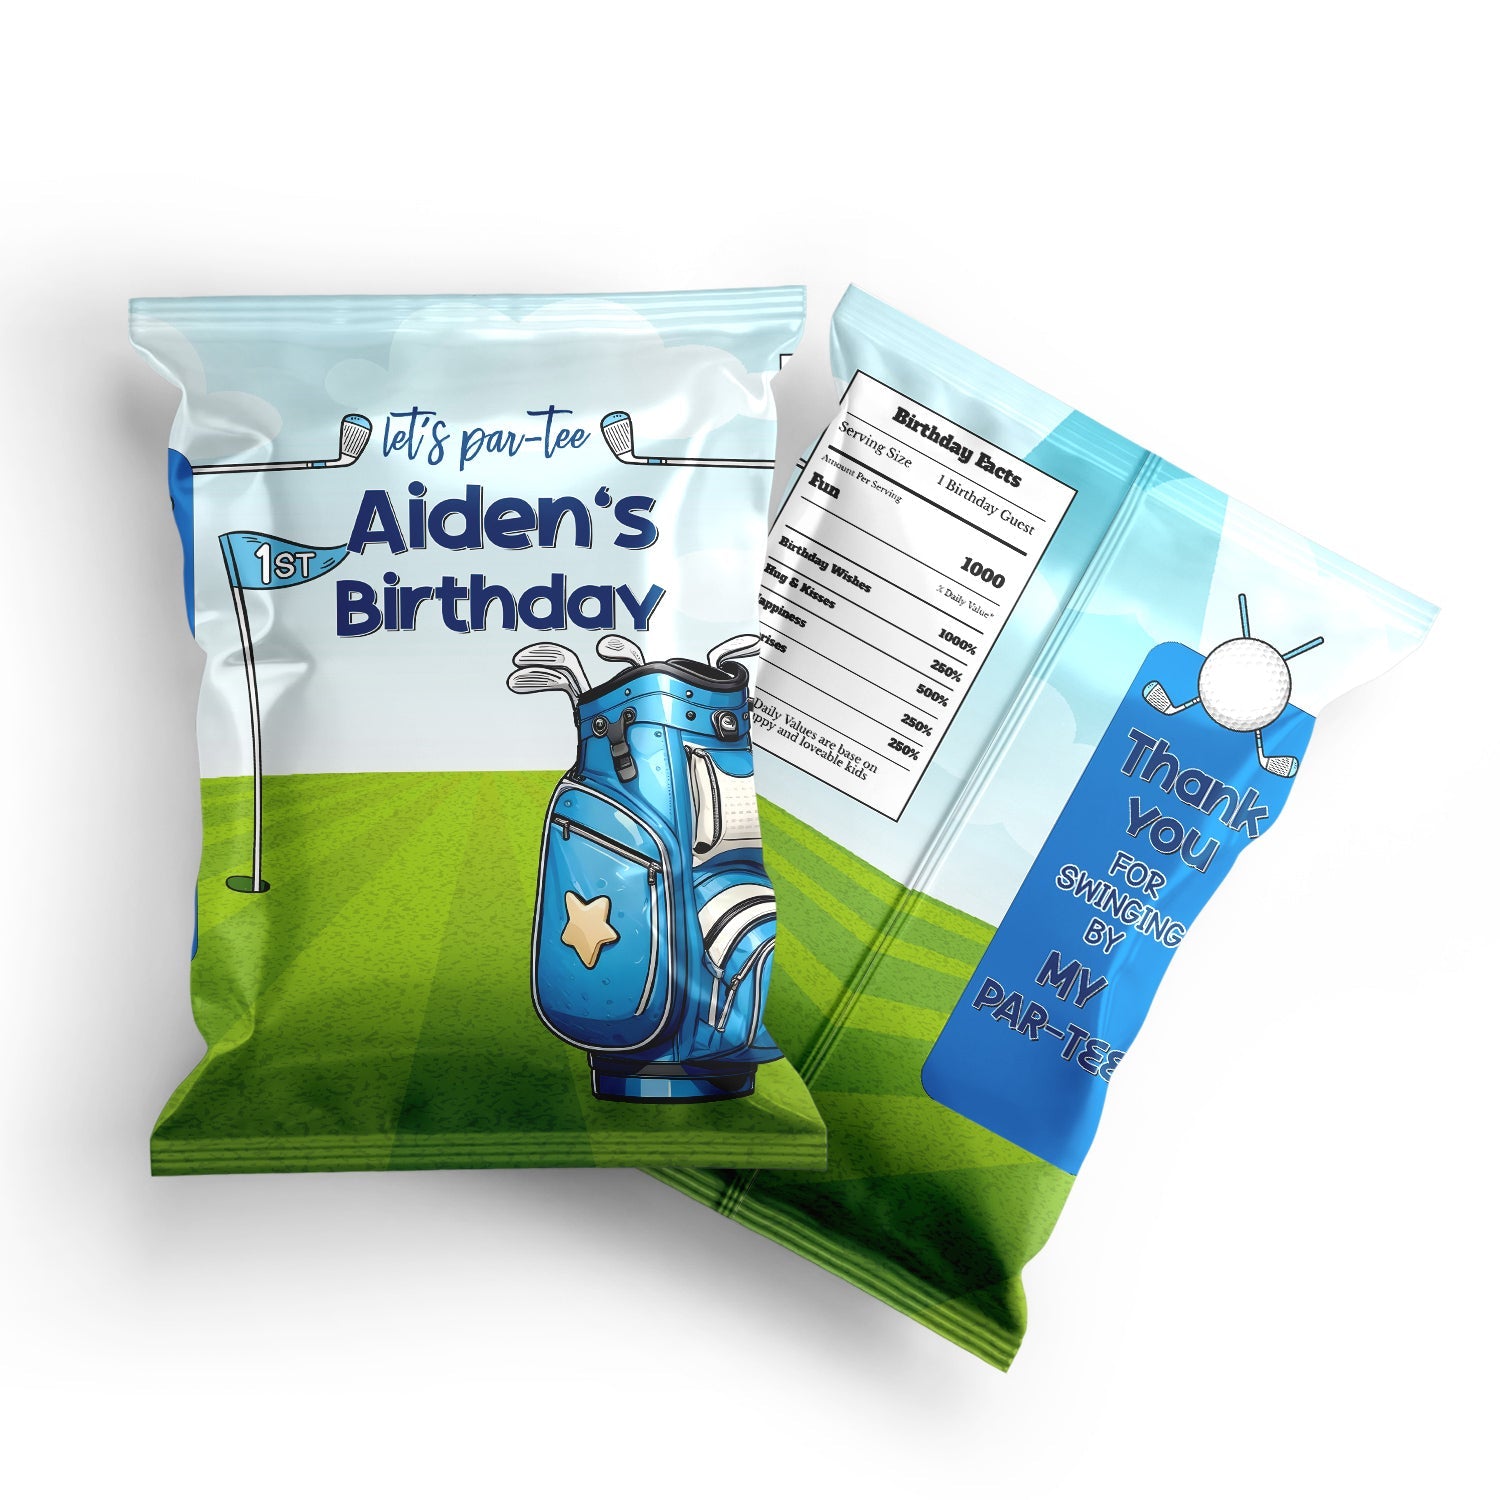 Mini Golf Chips Bag Label: Custom chips bag labels adorned with mini golf theme